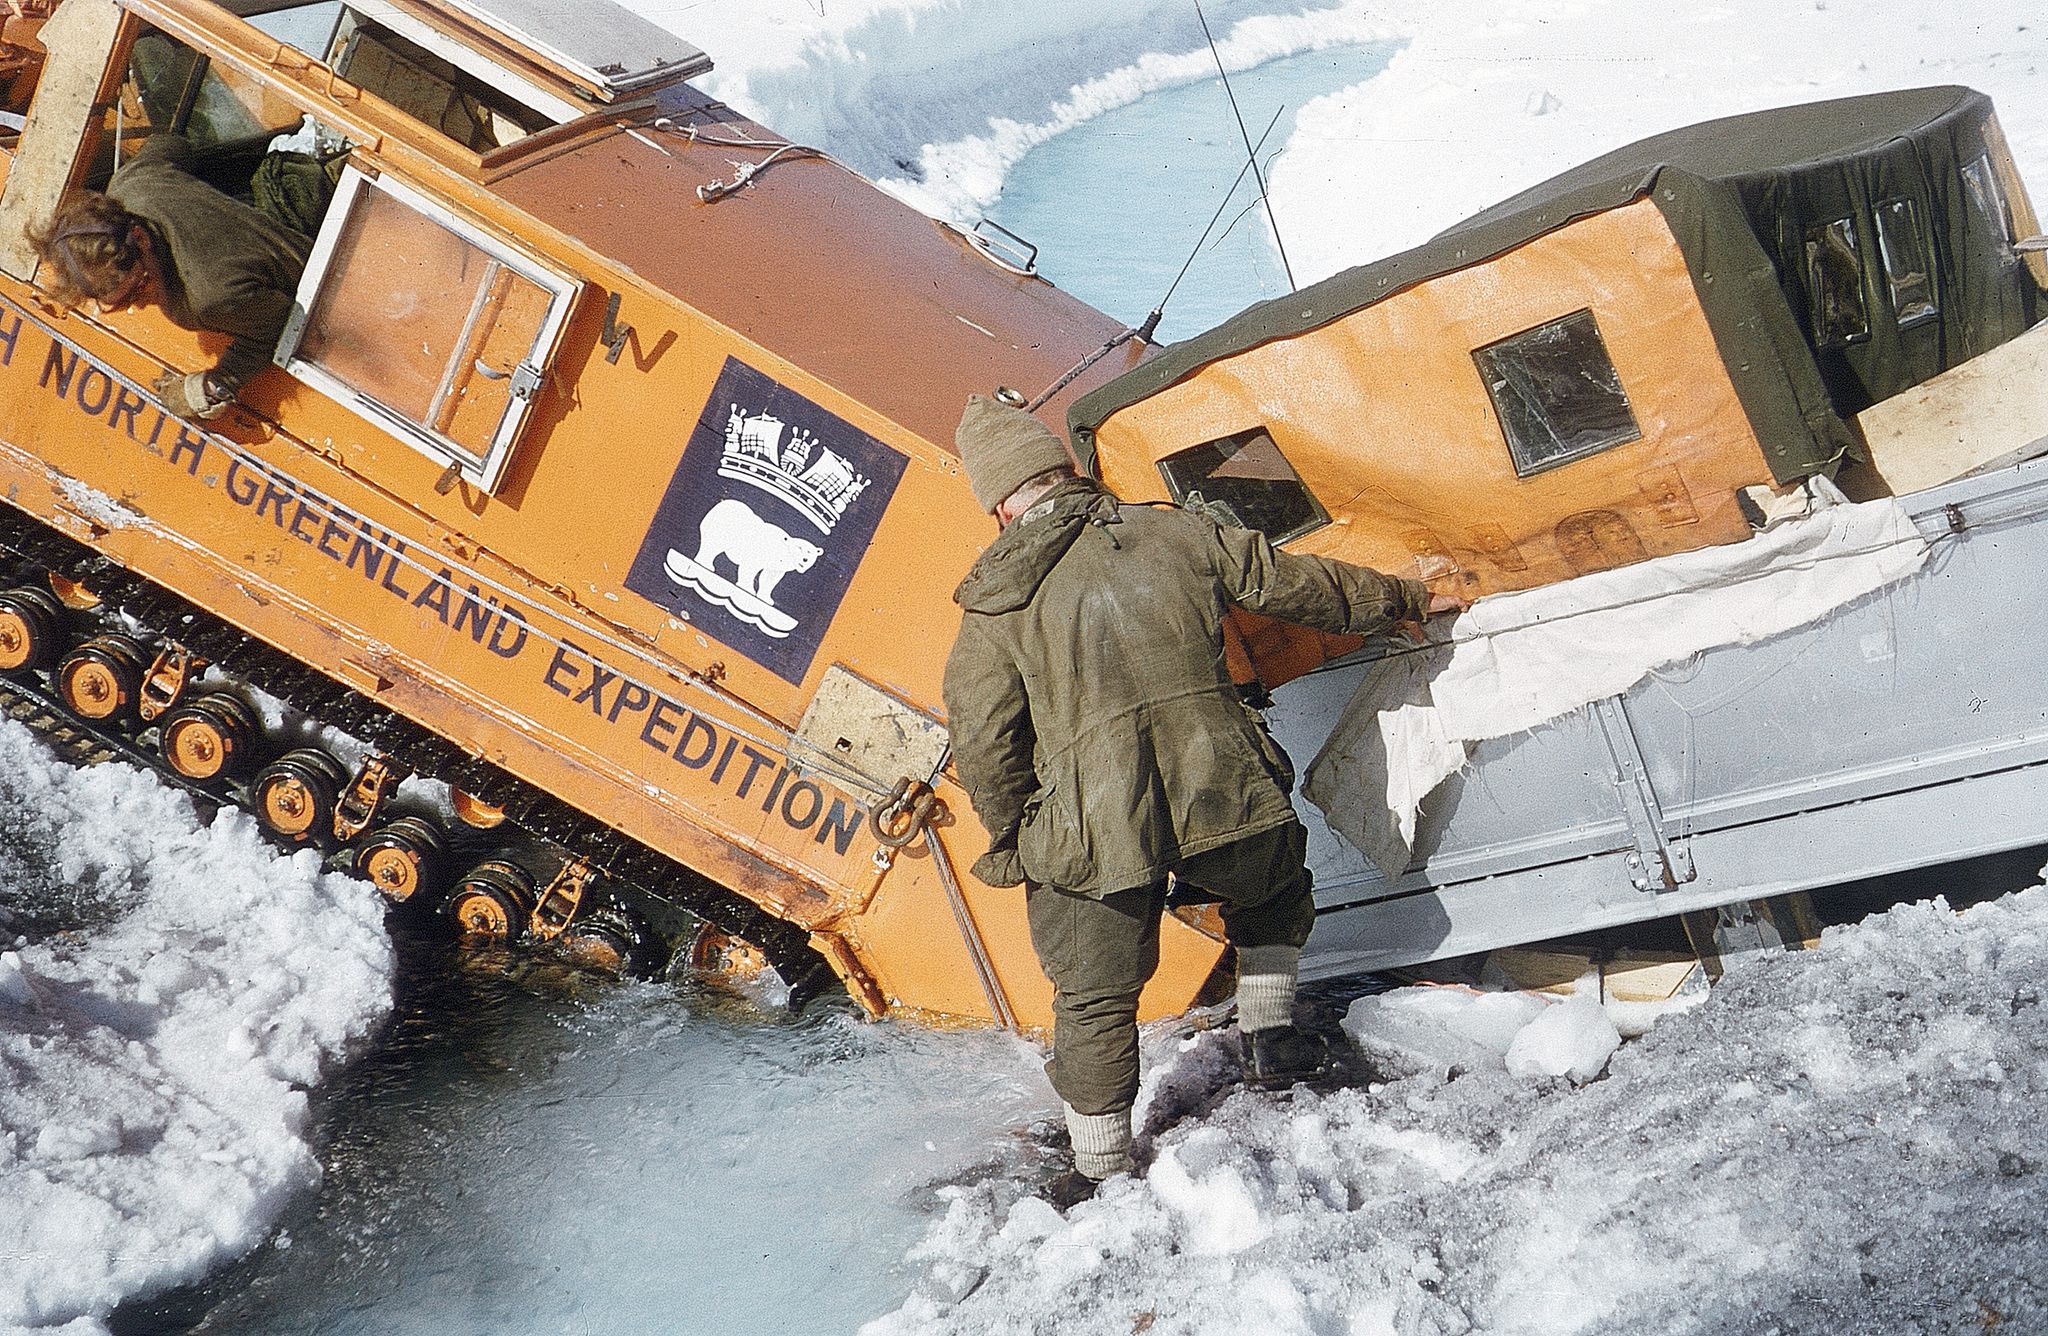 British North Greenland Expedition 1952